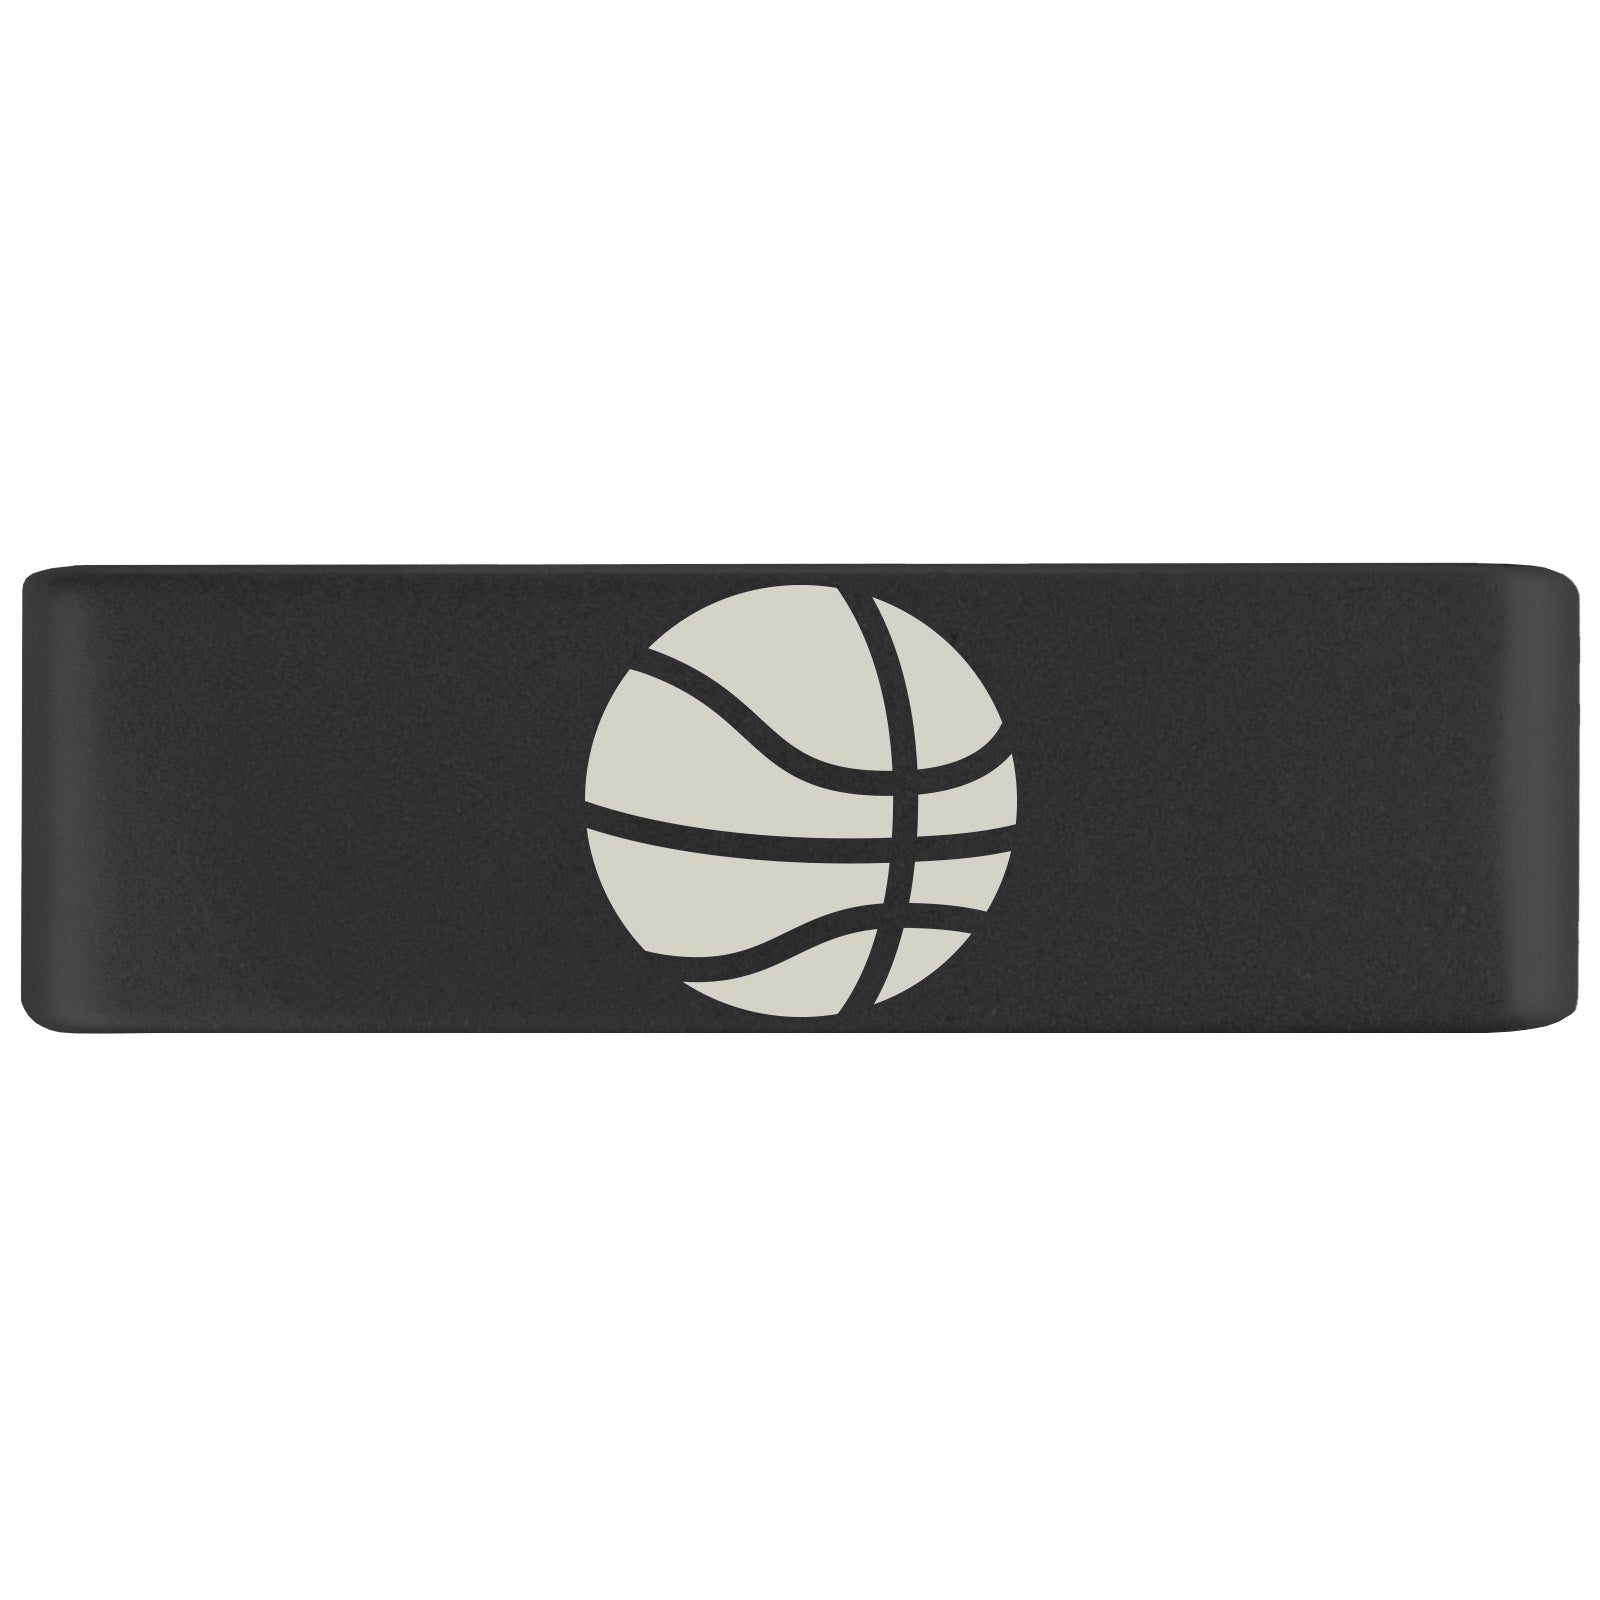 Basketball Badge Badge 19mm - ROAD iD